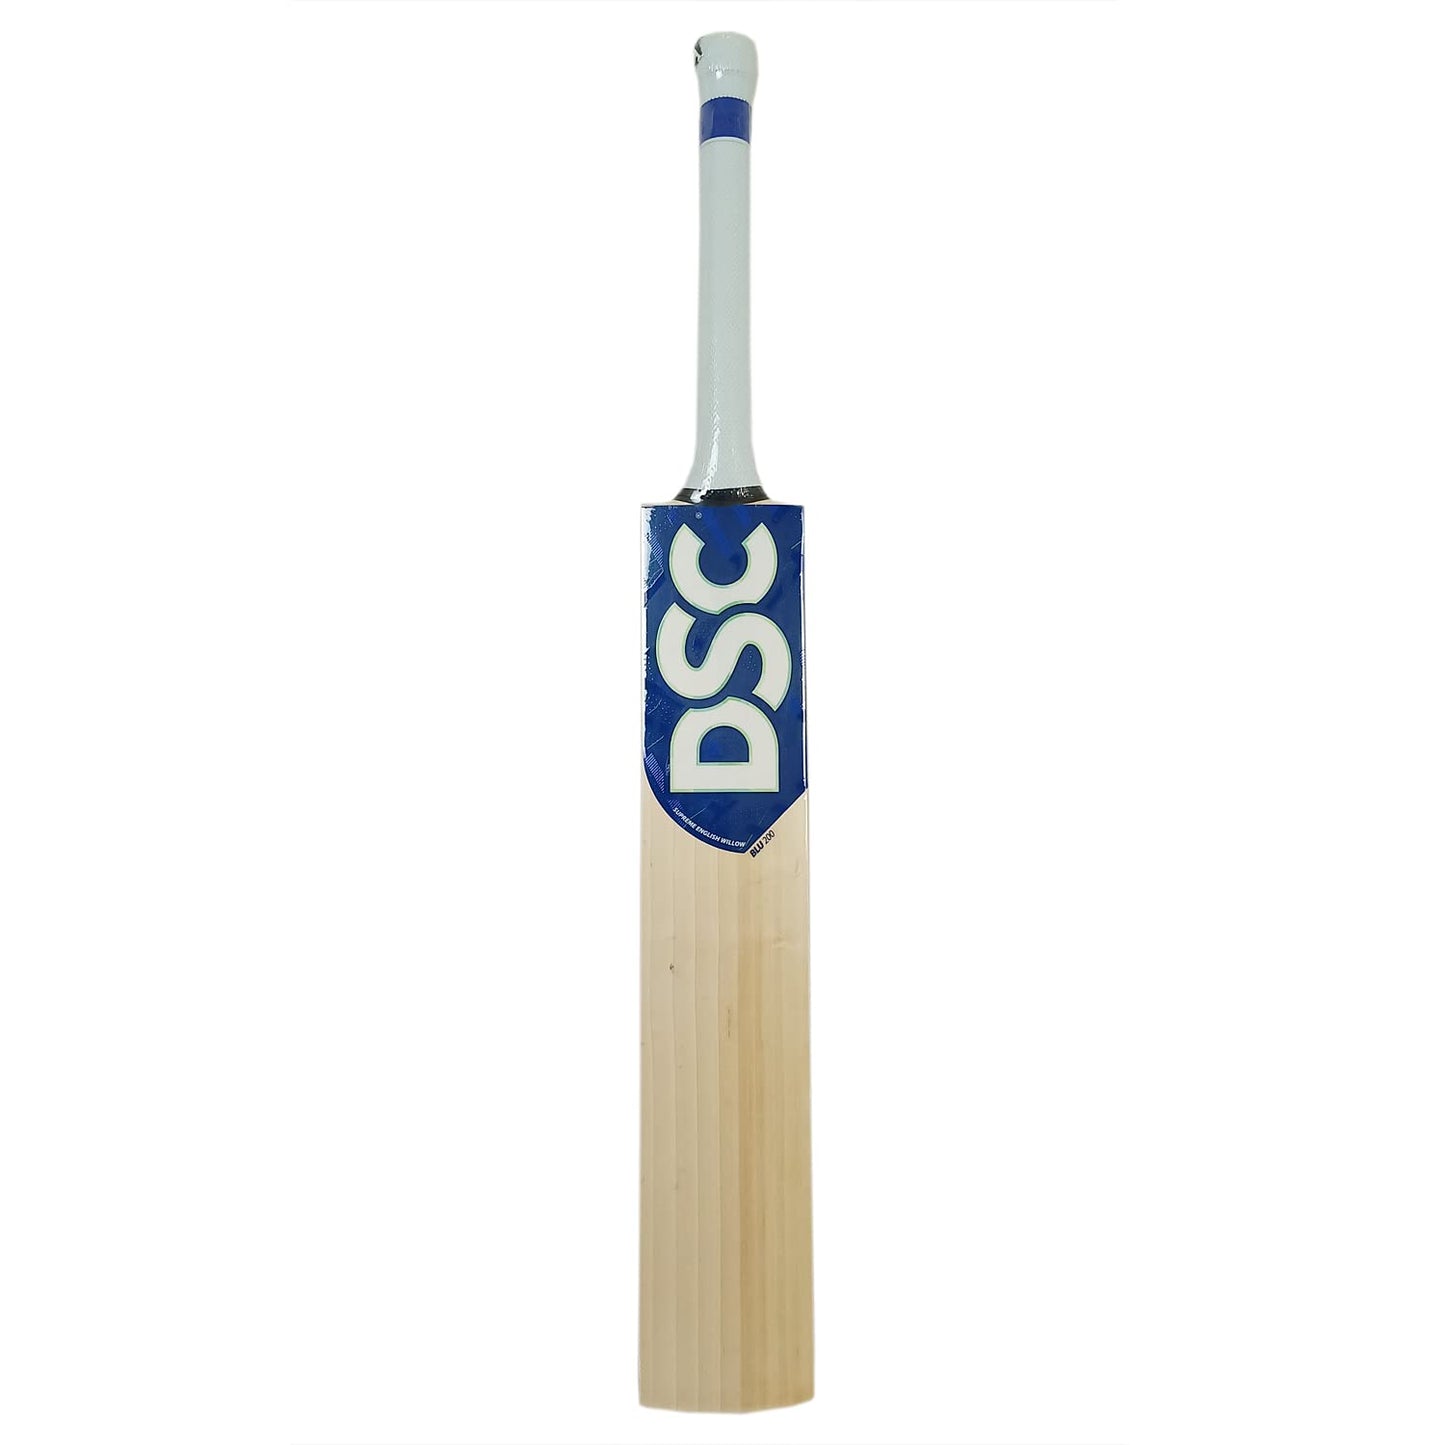 DSC Blu 200 English Willow Cricket Bat - Best Price online Prokicksports.com